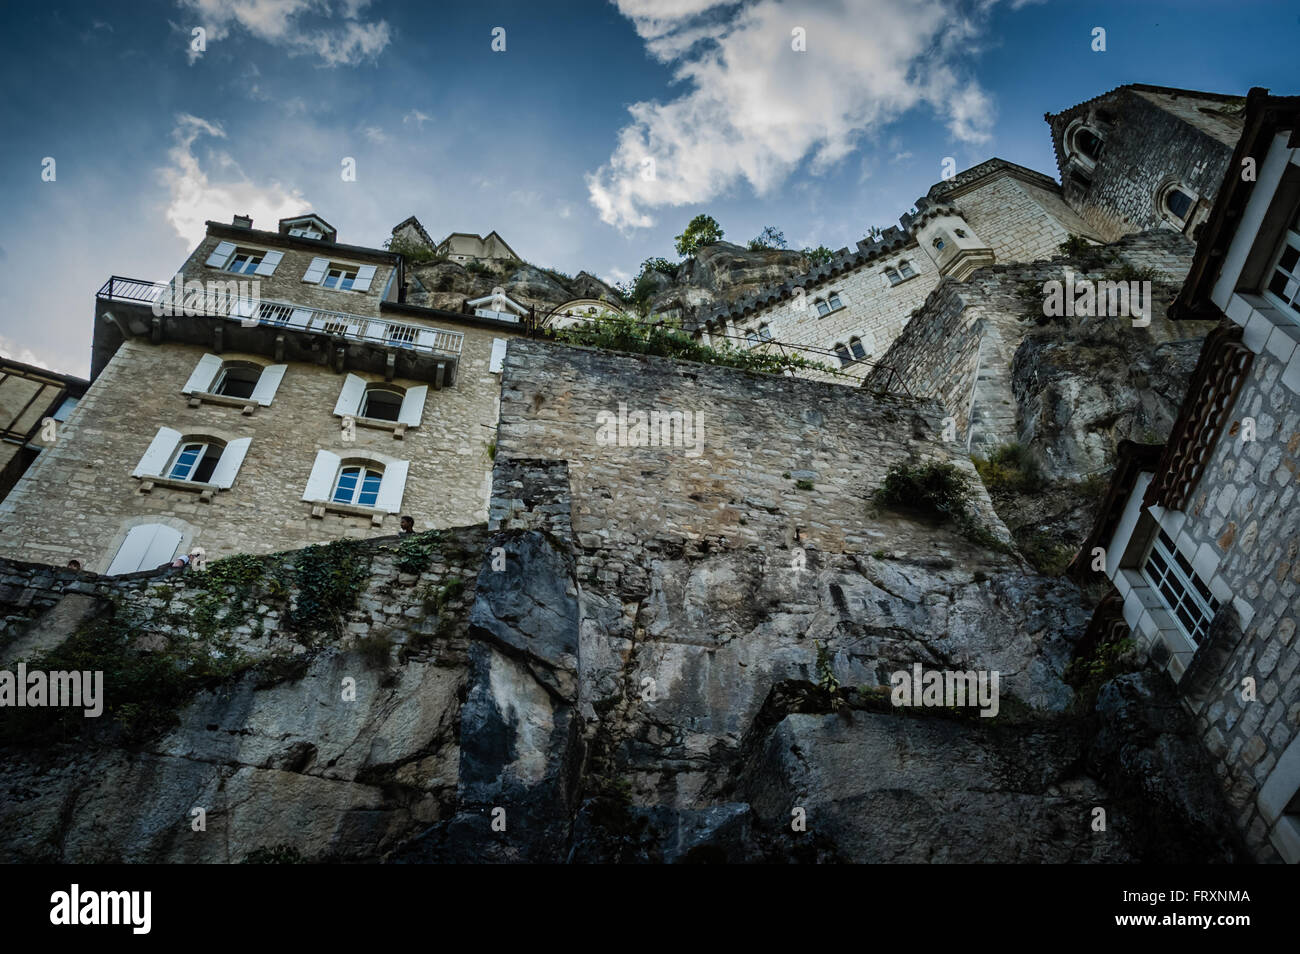 Villas built into a cliff, looking skywards Stock Photo